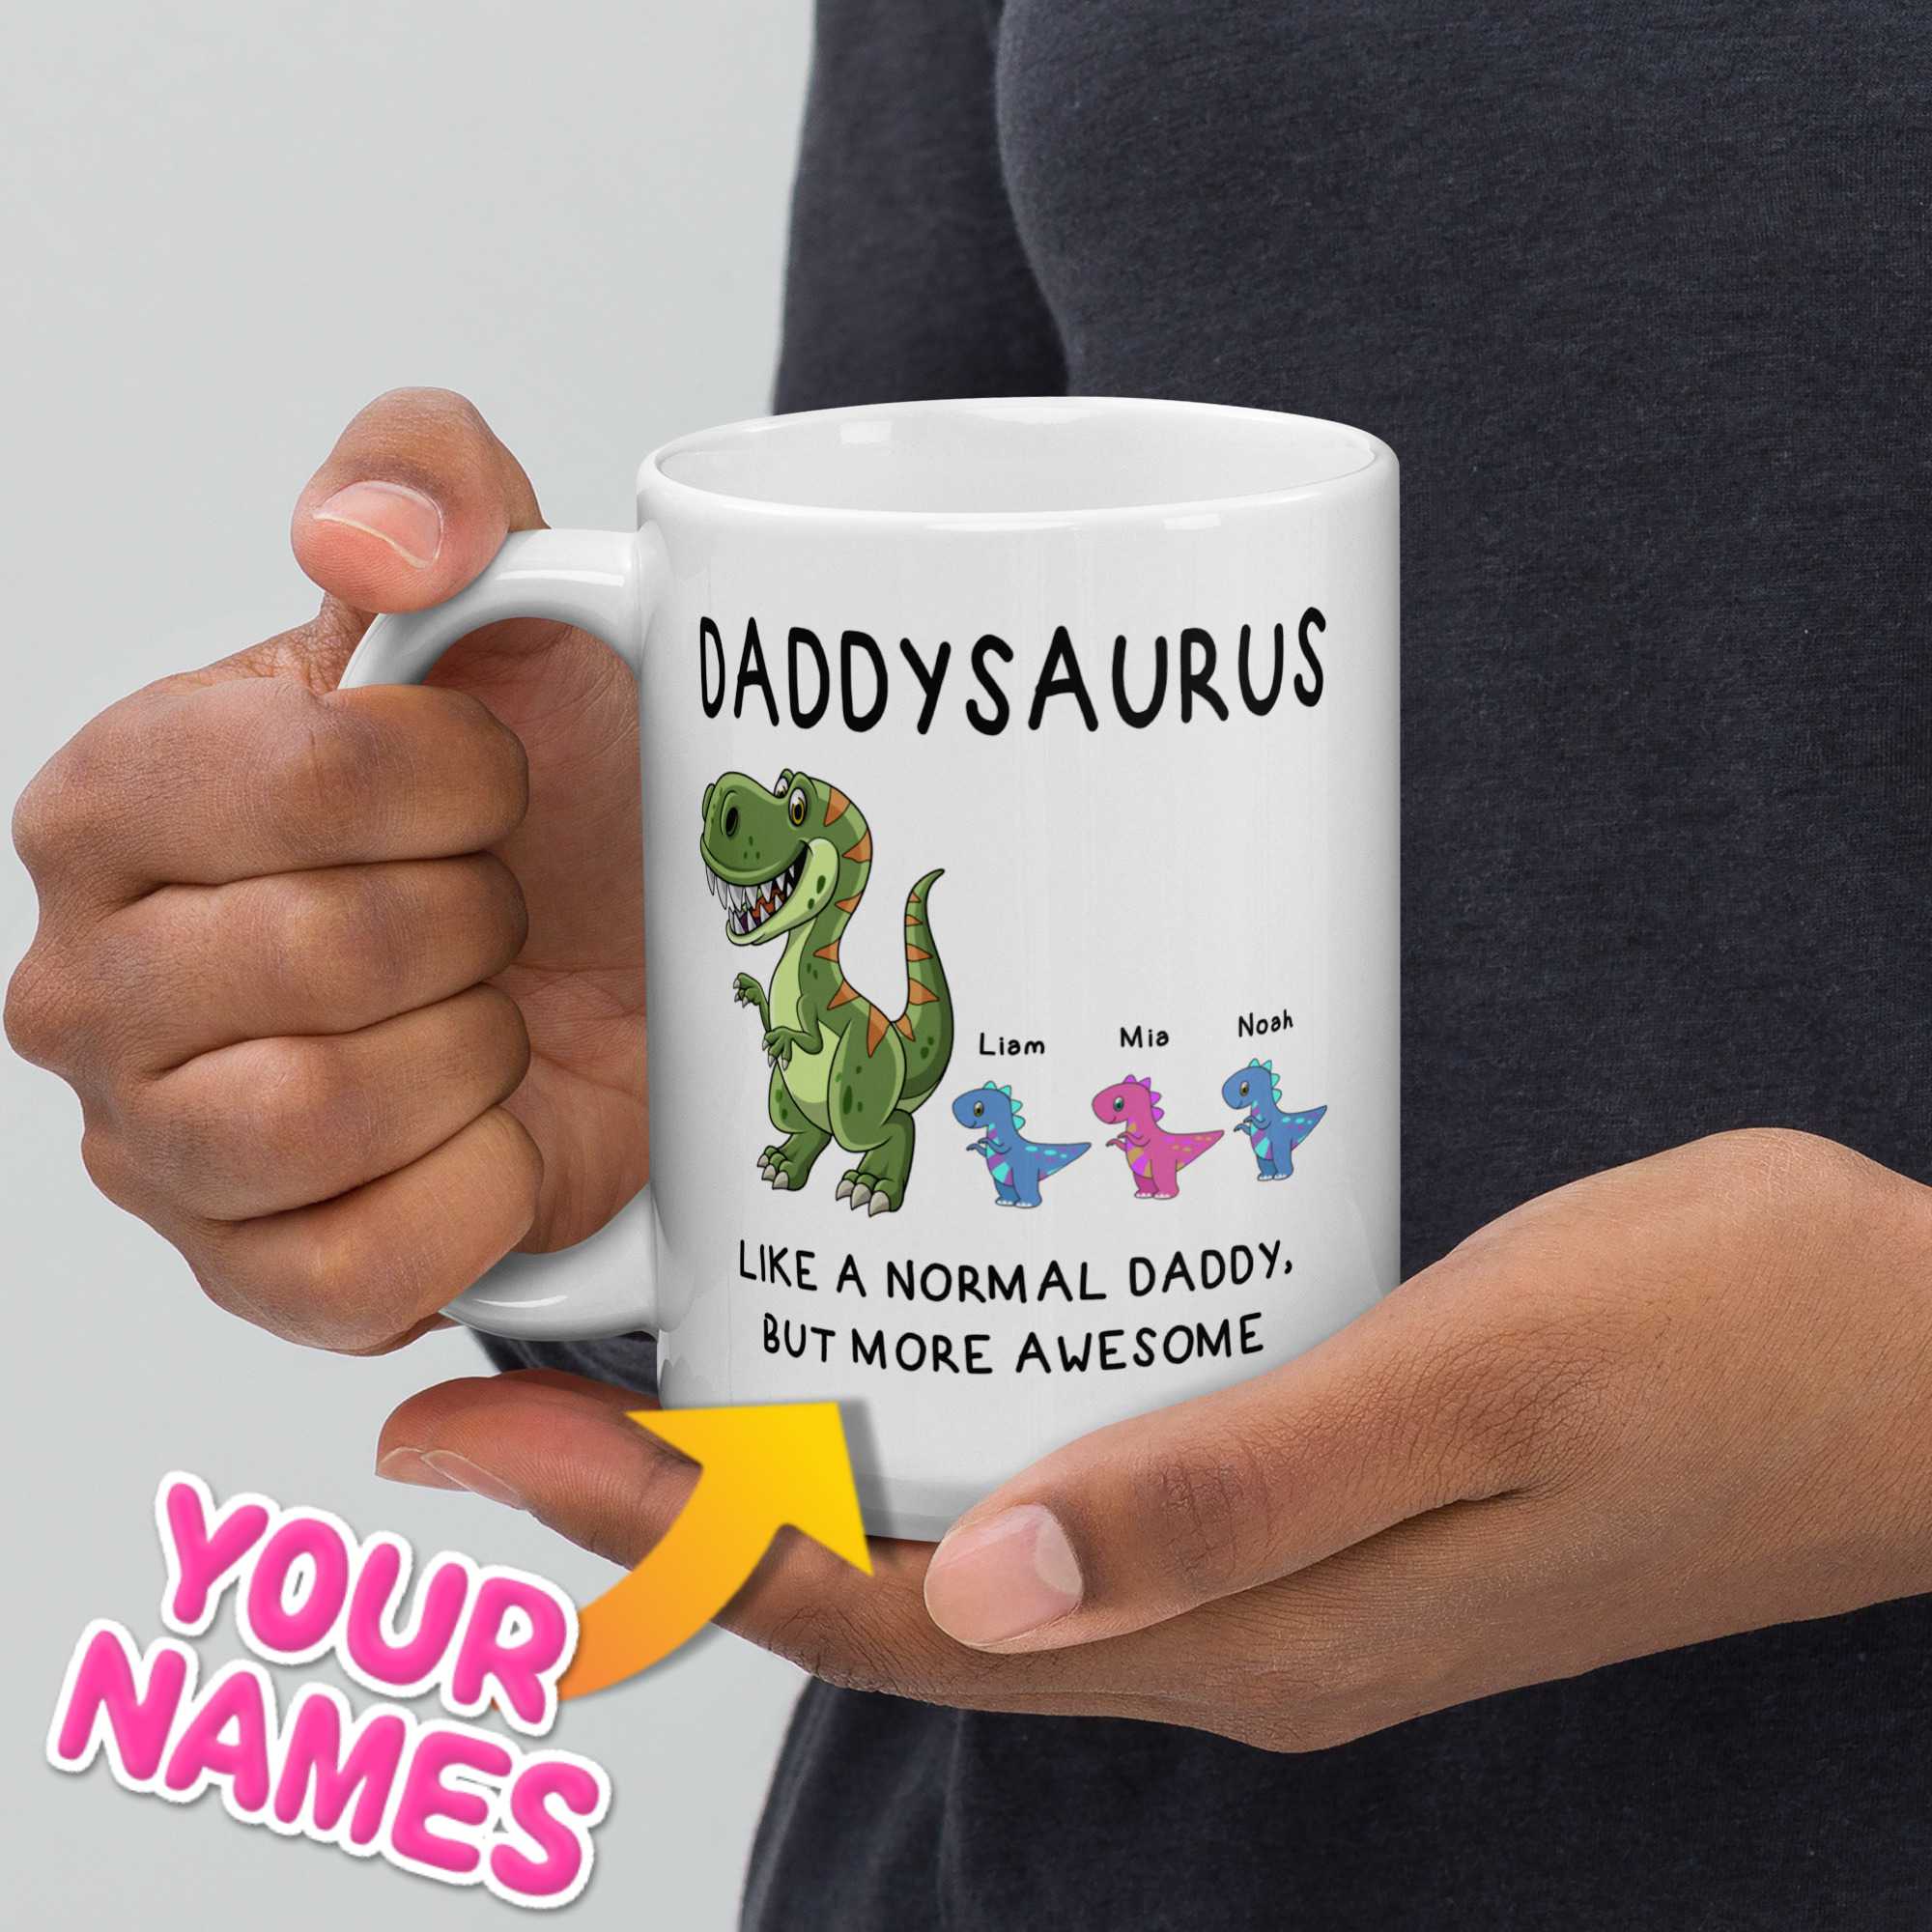 https://passionify.com/wp-content/uploads/2022/05/Daddysaurus-mug.jpg